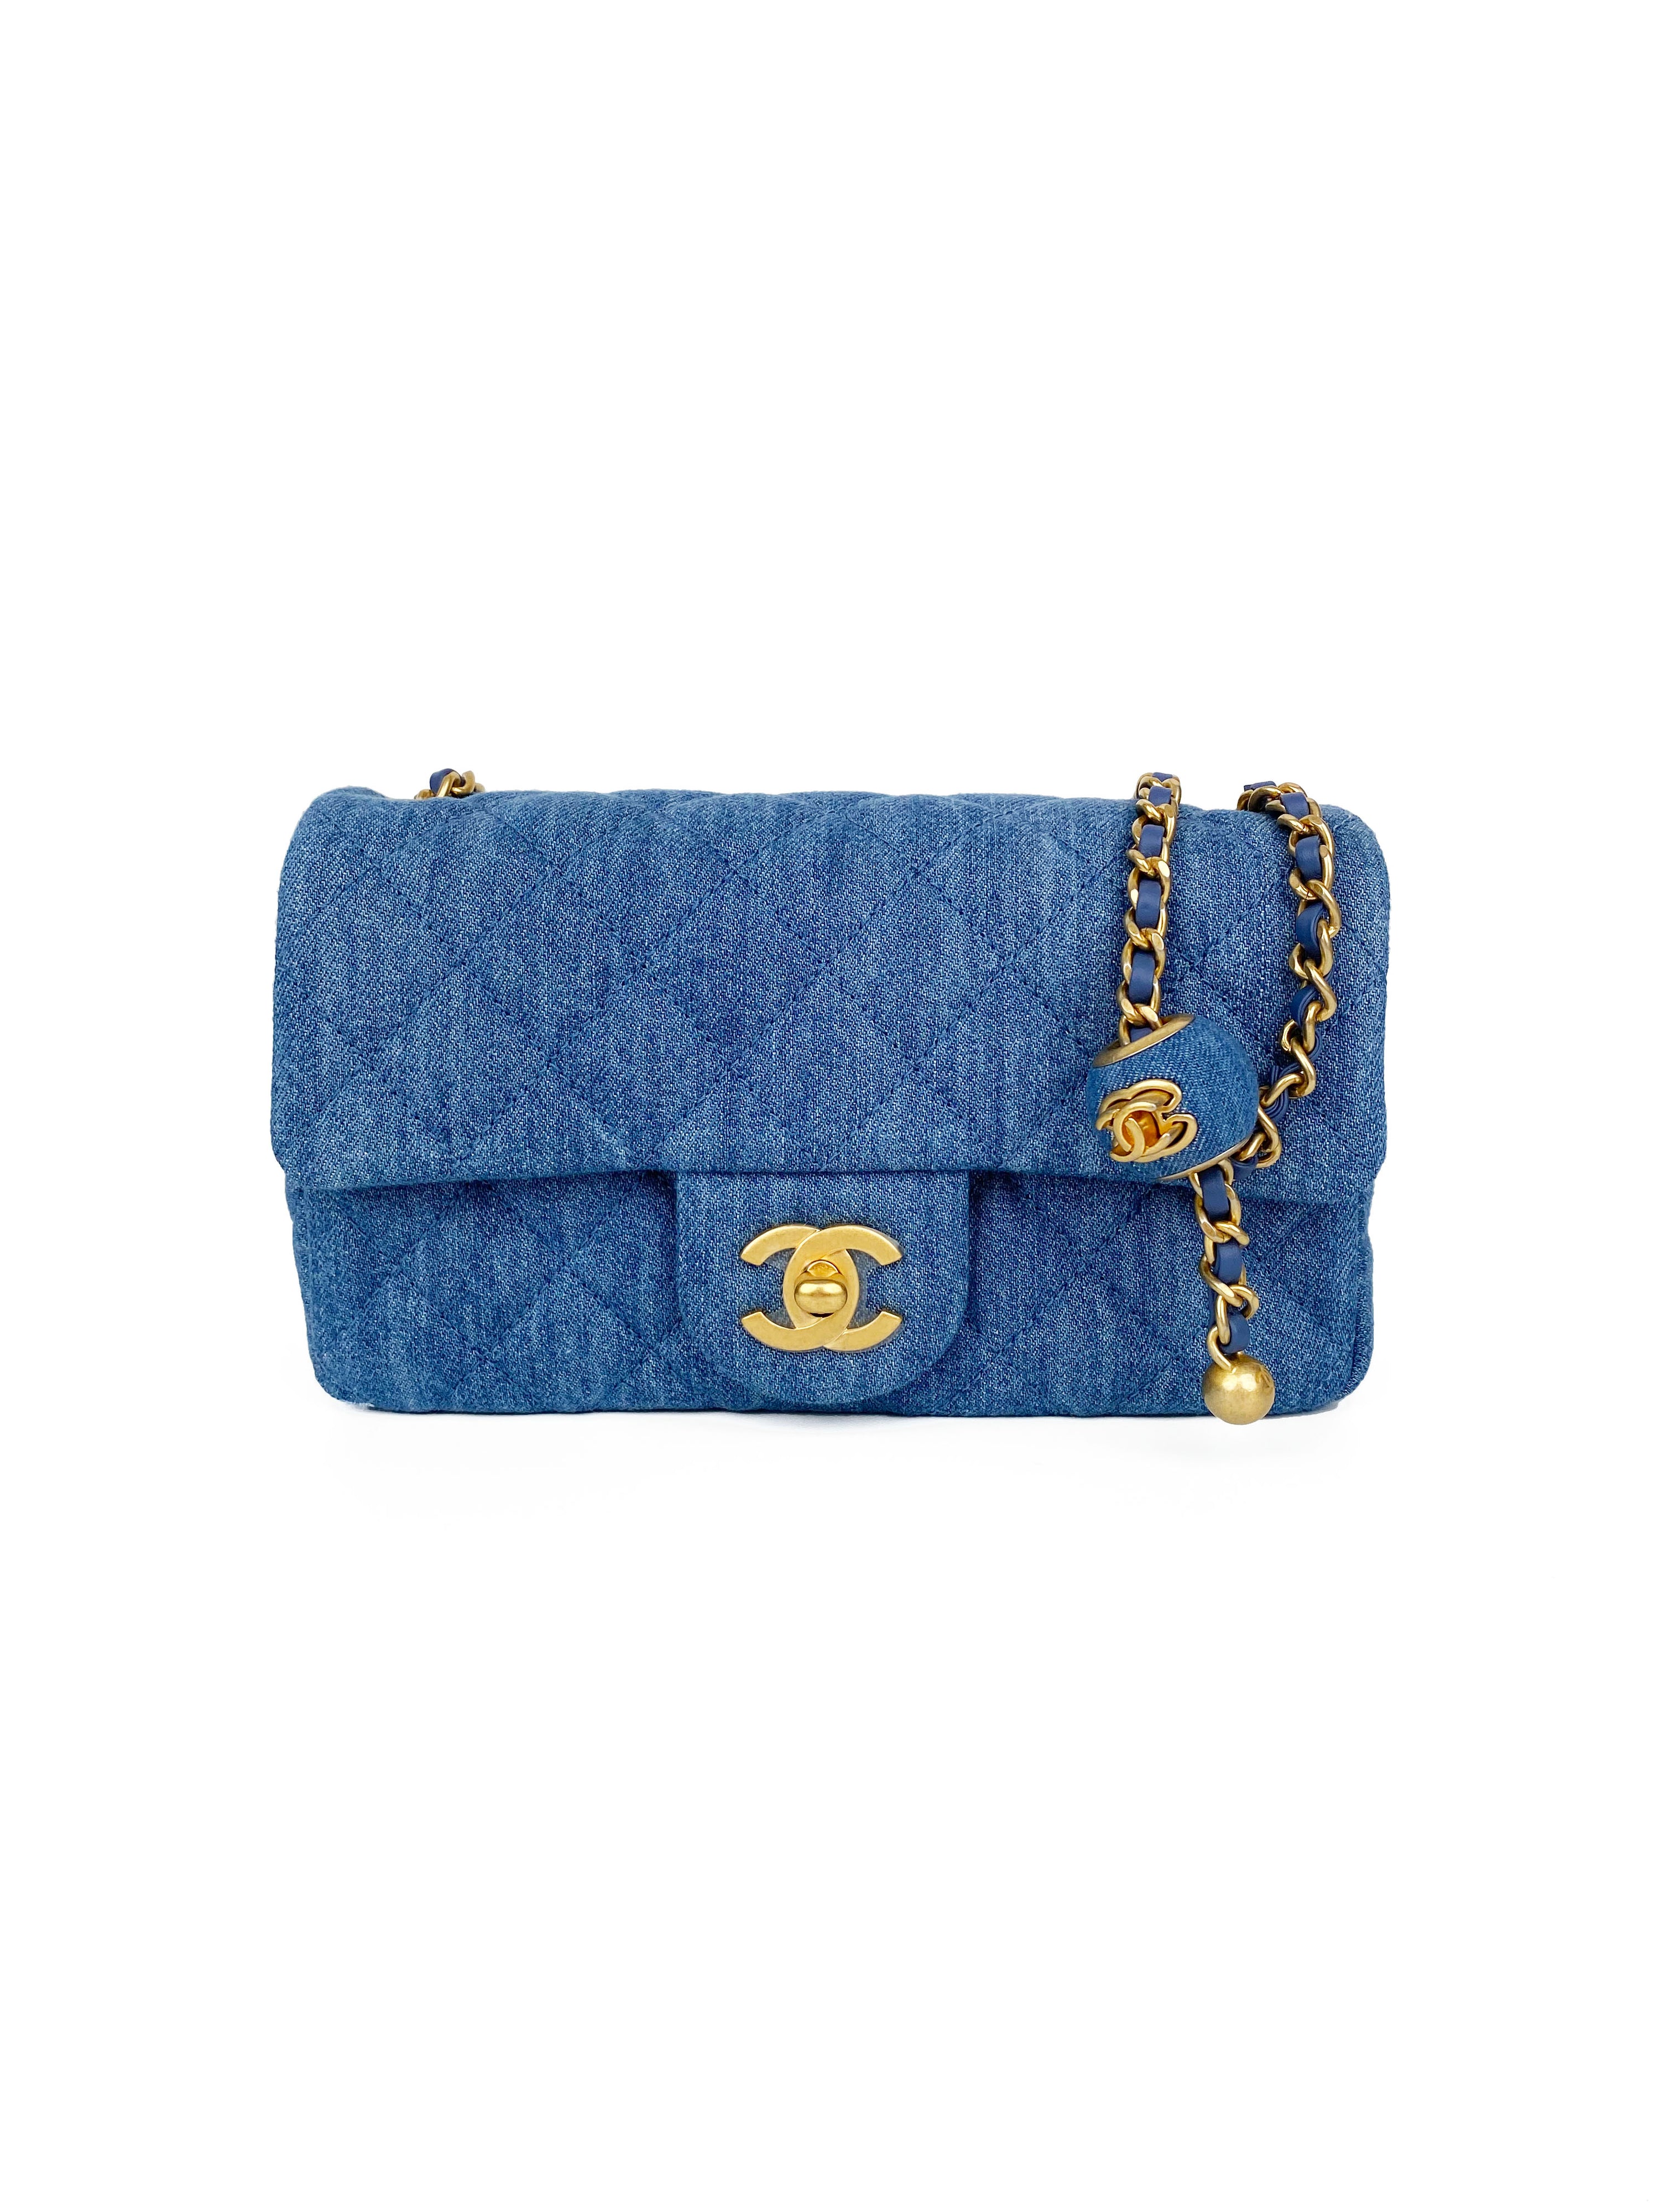 Chanel Mini Denim Classic Flap Bag with Pearl Crush